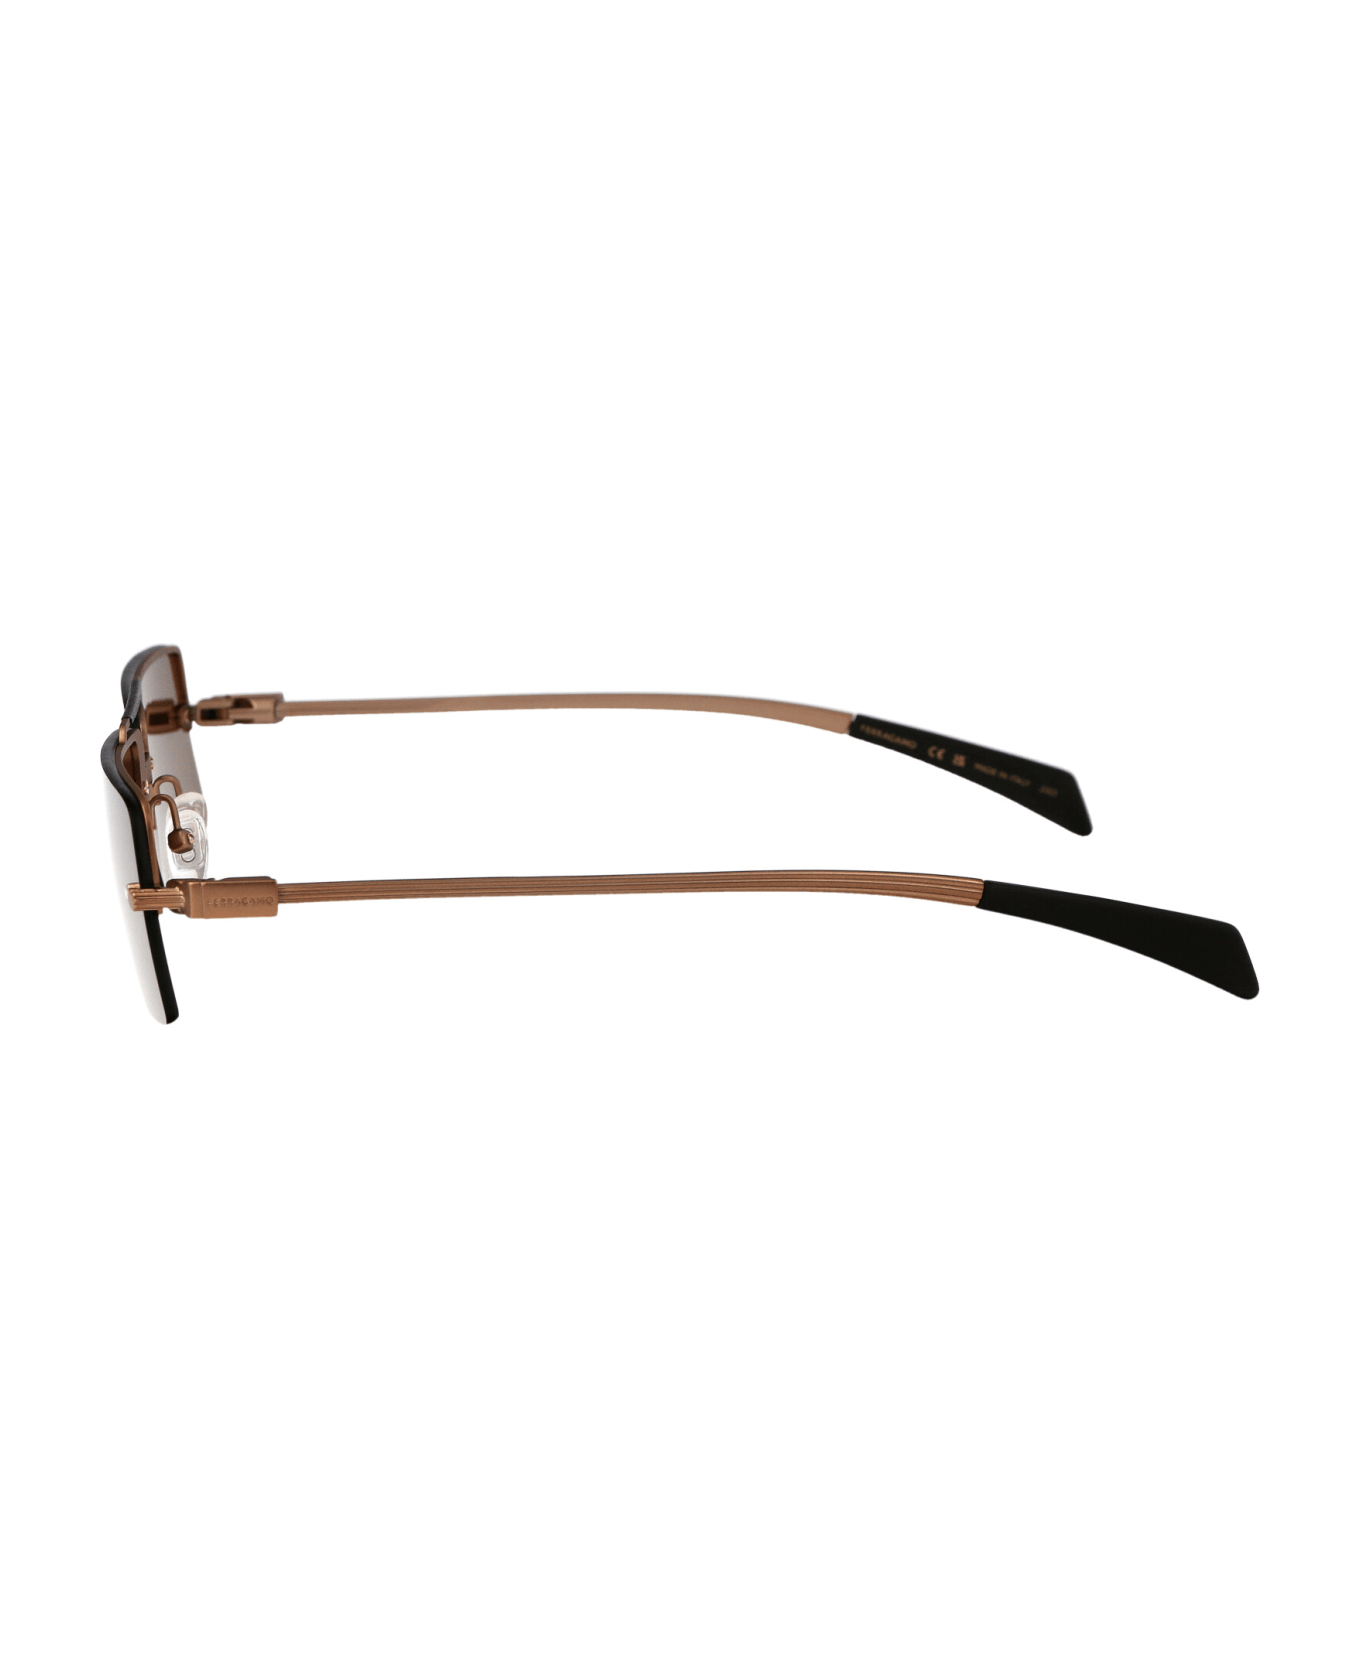 Salvatore Ferragamo Eyewear Sf306s Sunglasses - 762 GOLD BRONZE